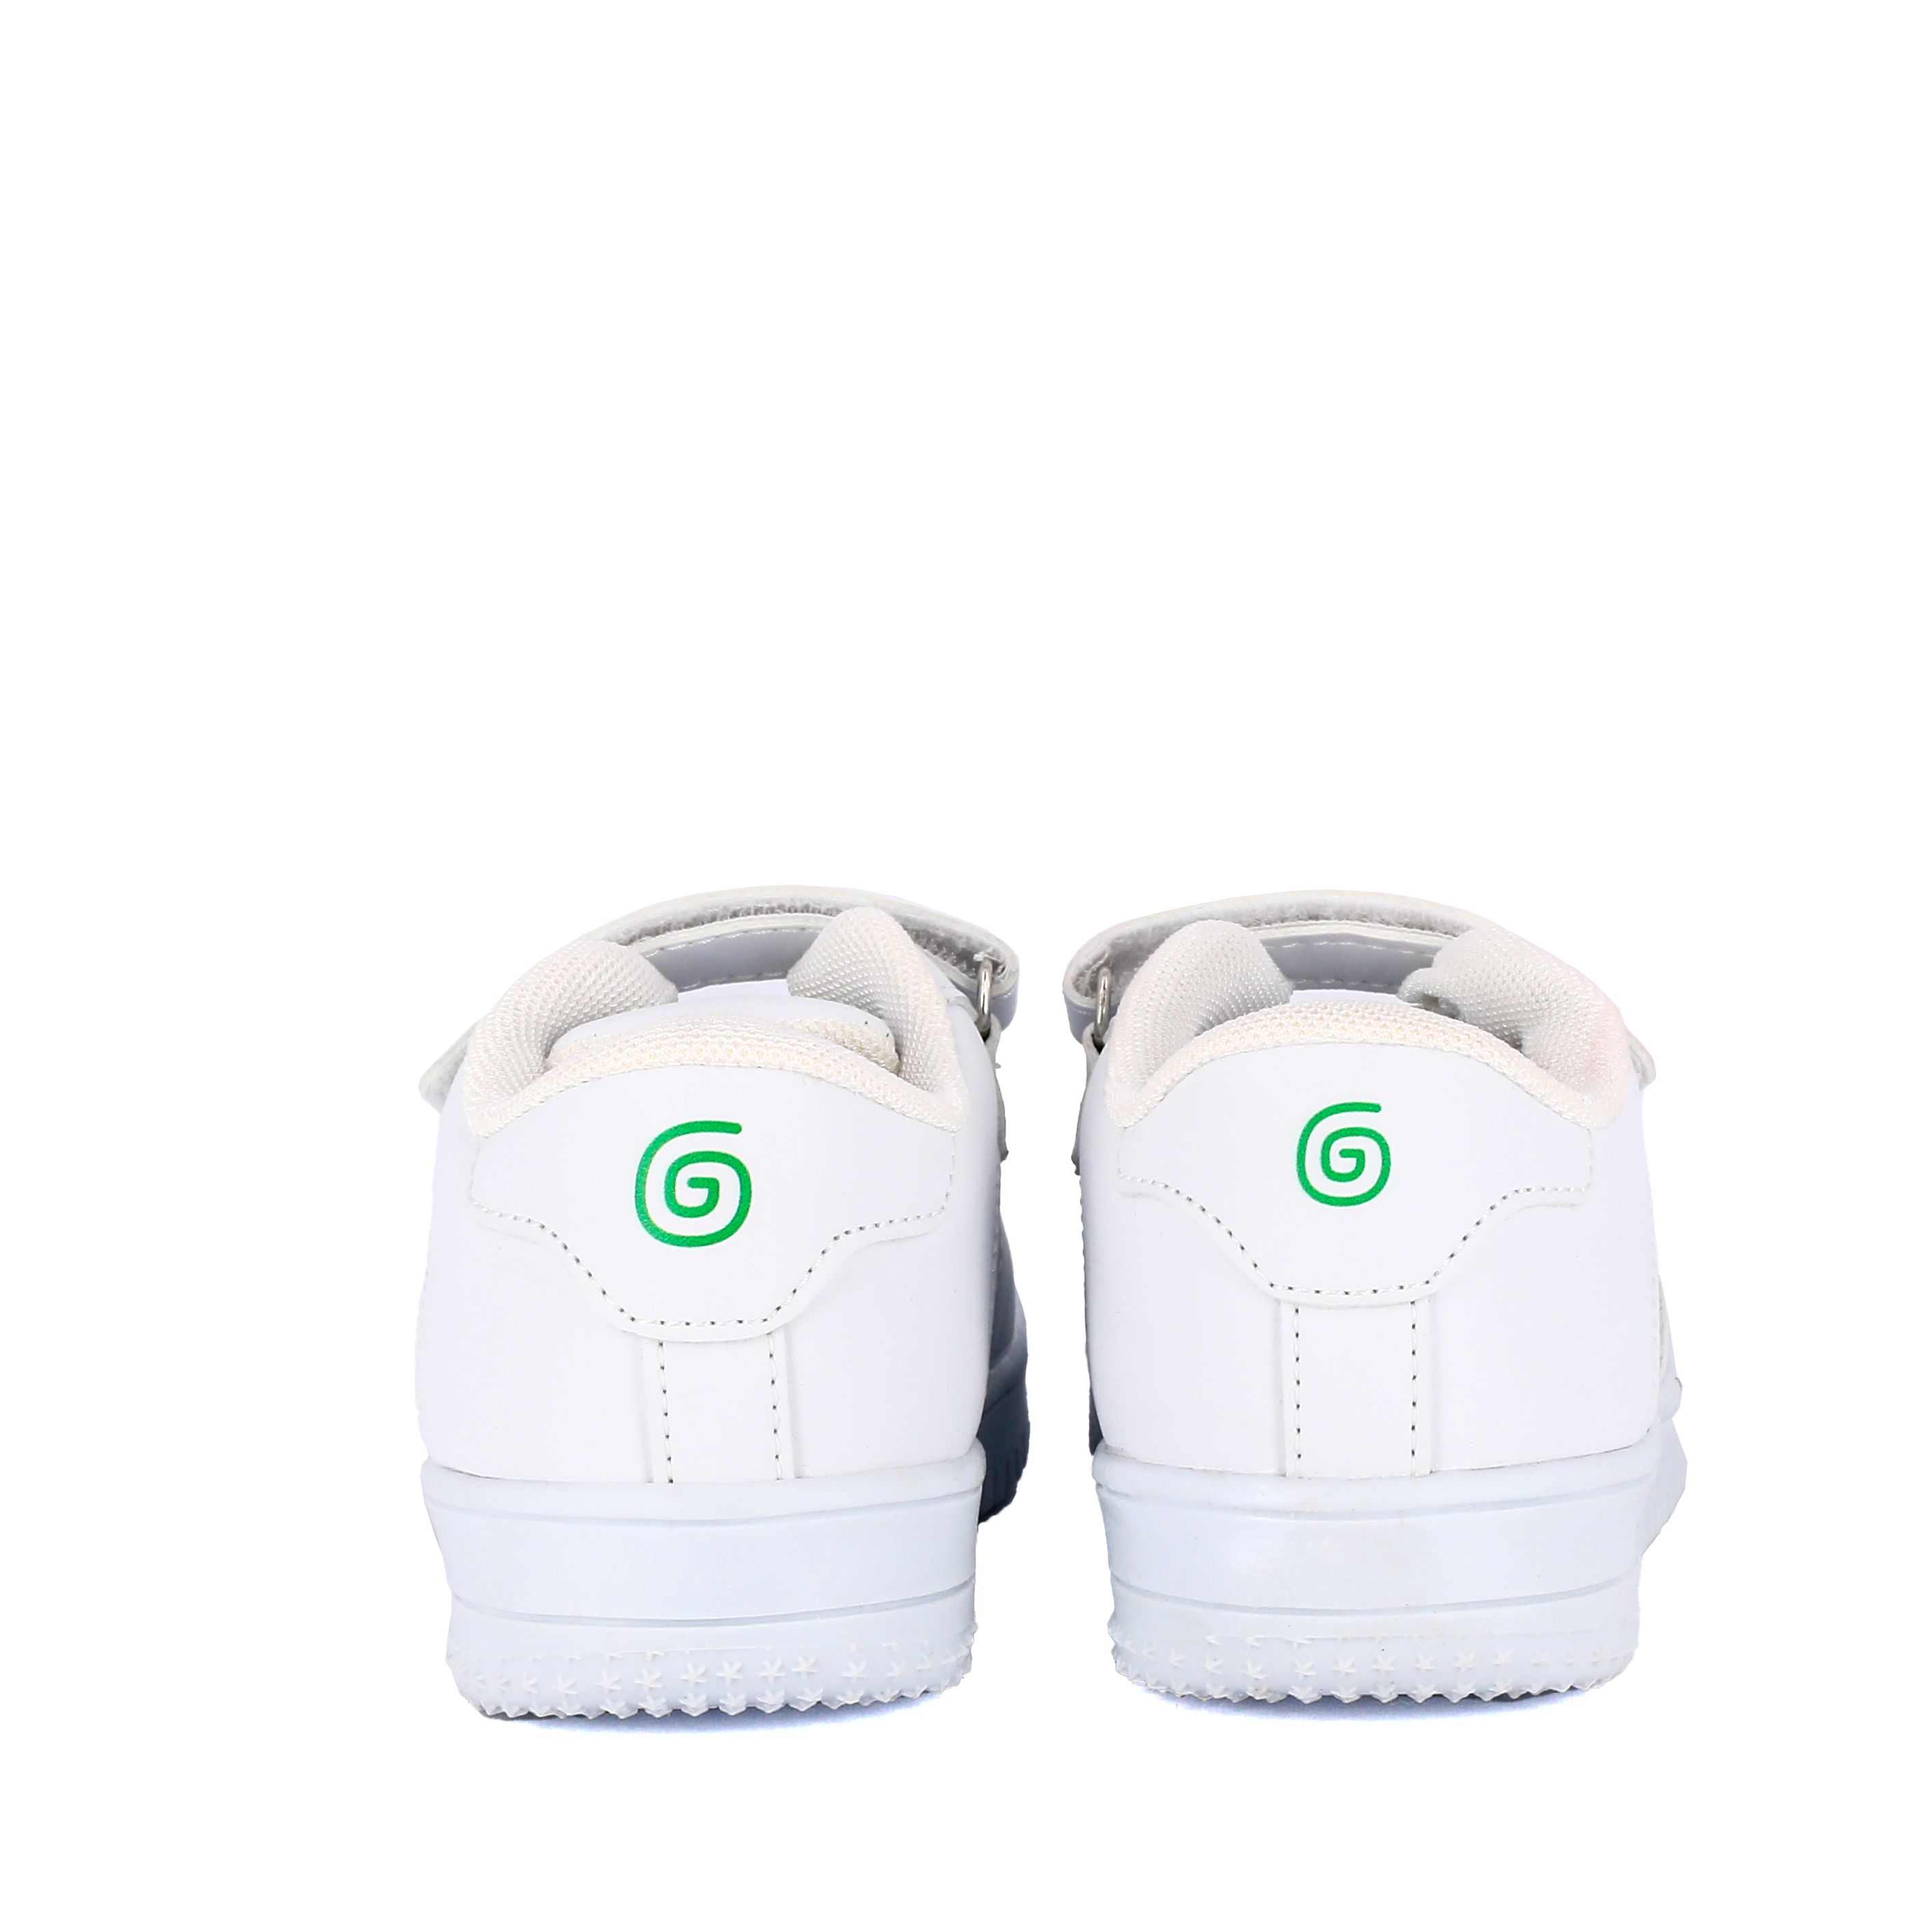 White unisex sneakers